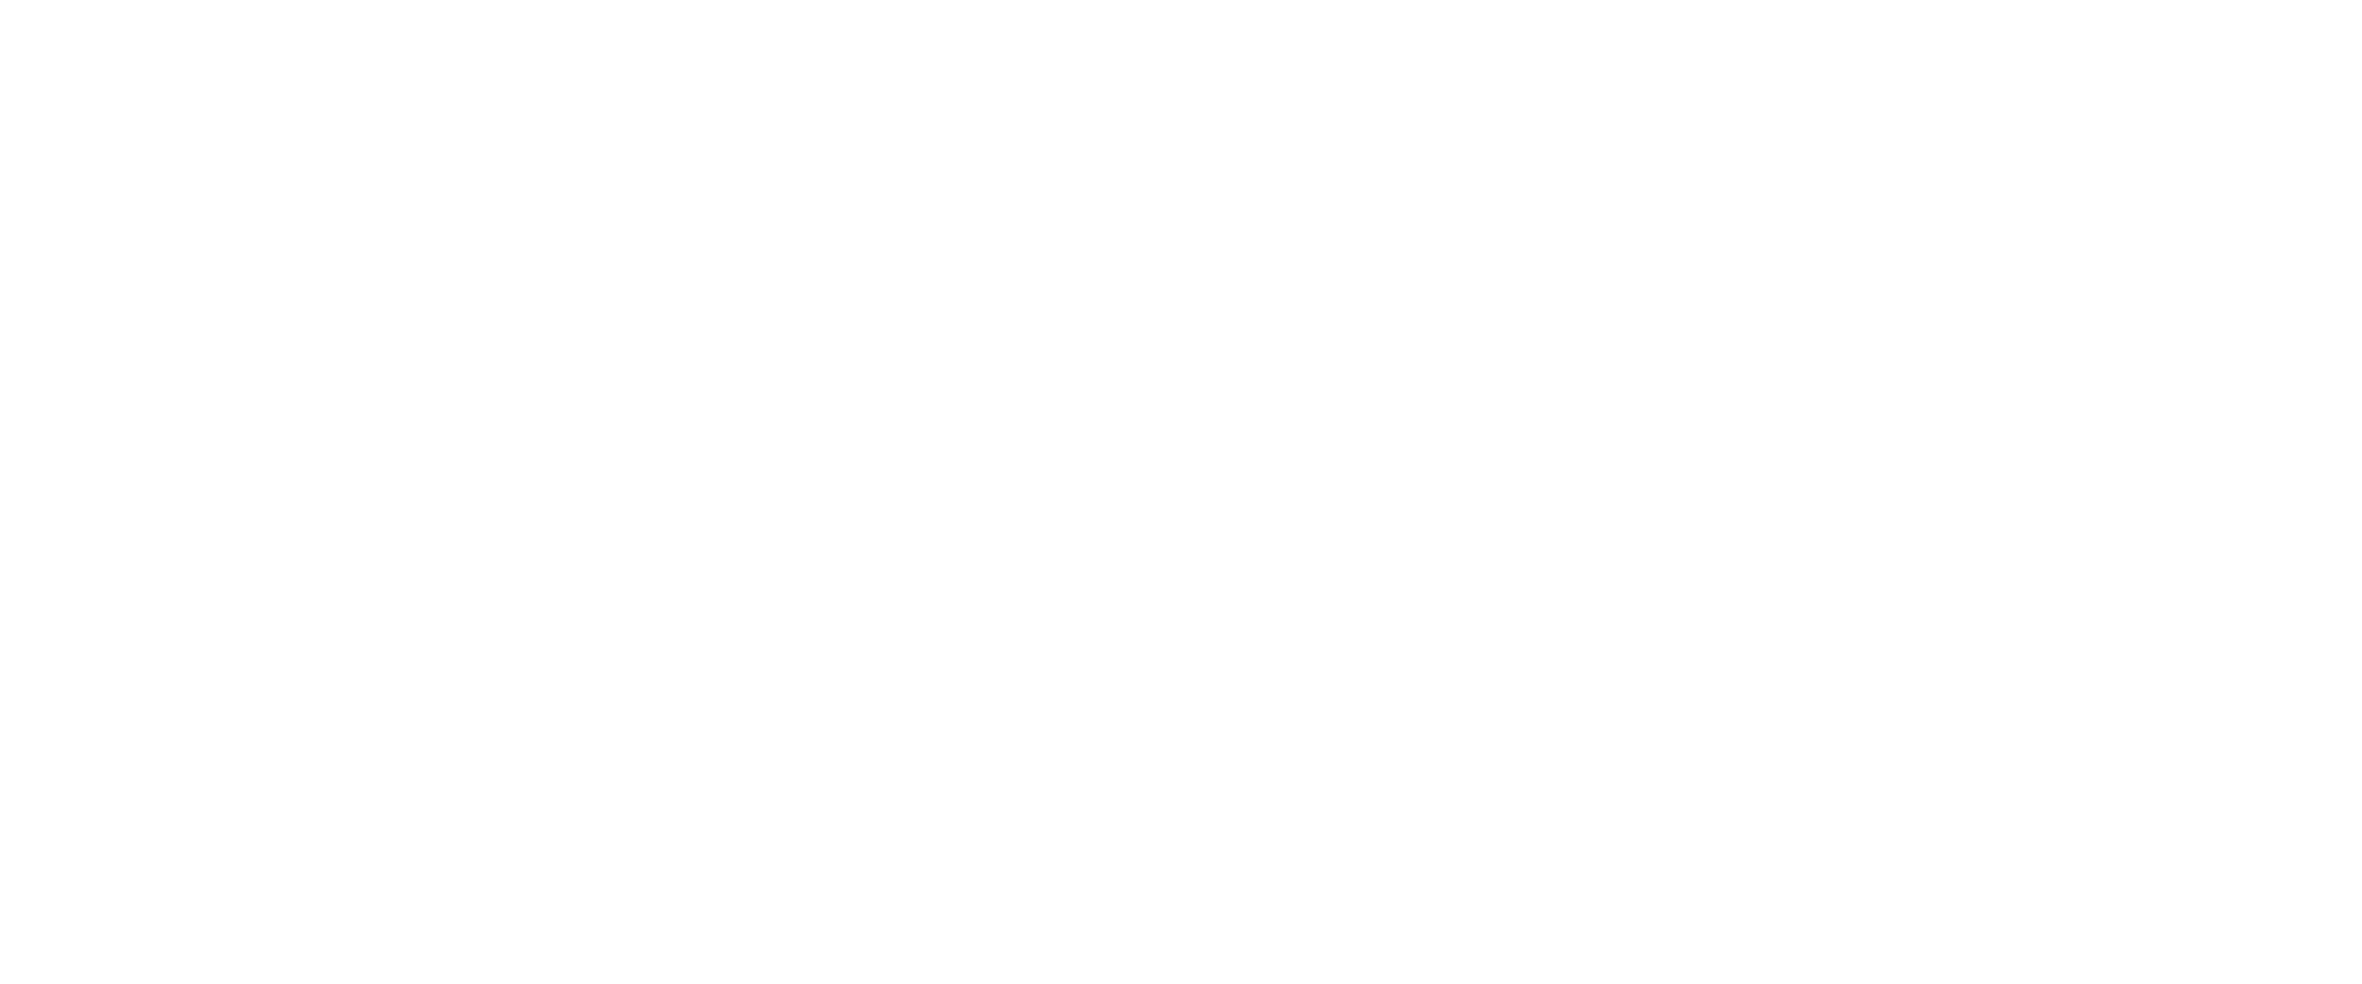 Island Green Golf Logo